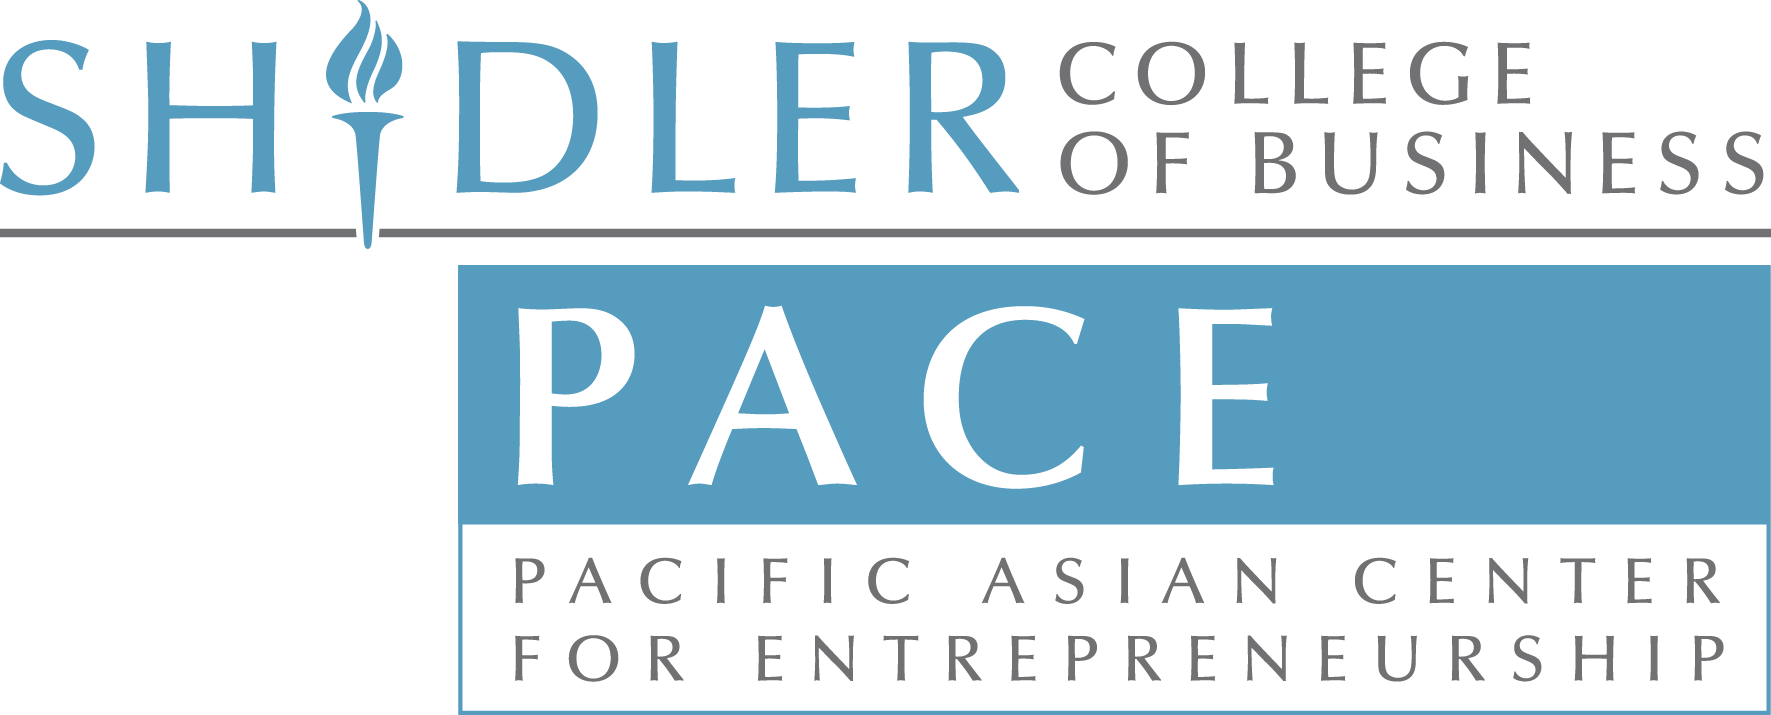 Pacific Asian Center for Entrepreneurship (PACE) - Shidler College of Business